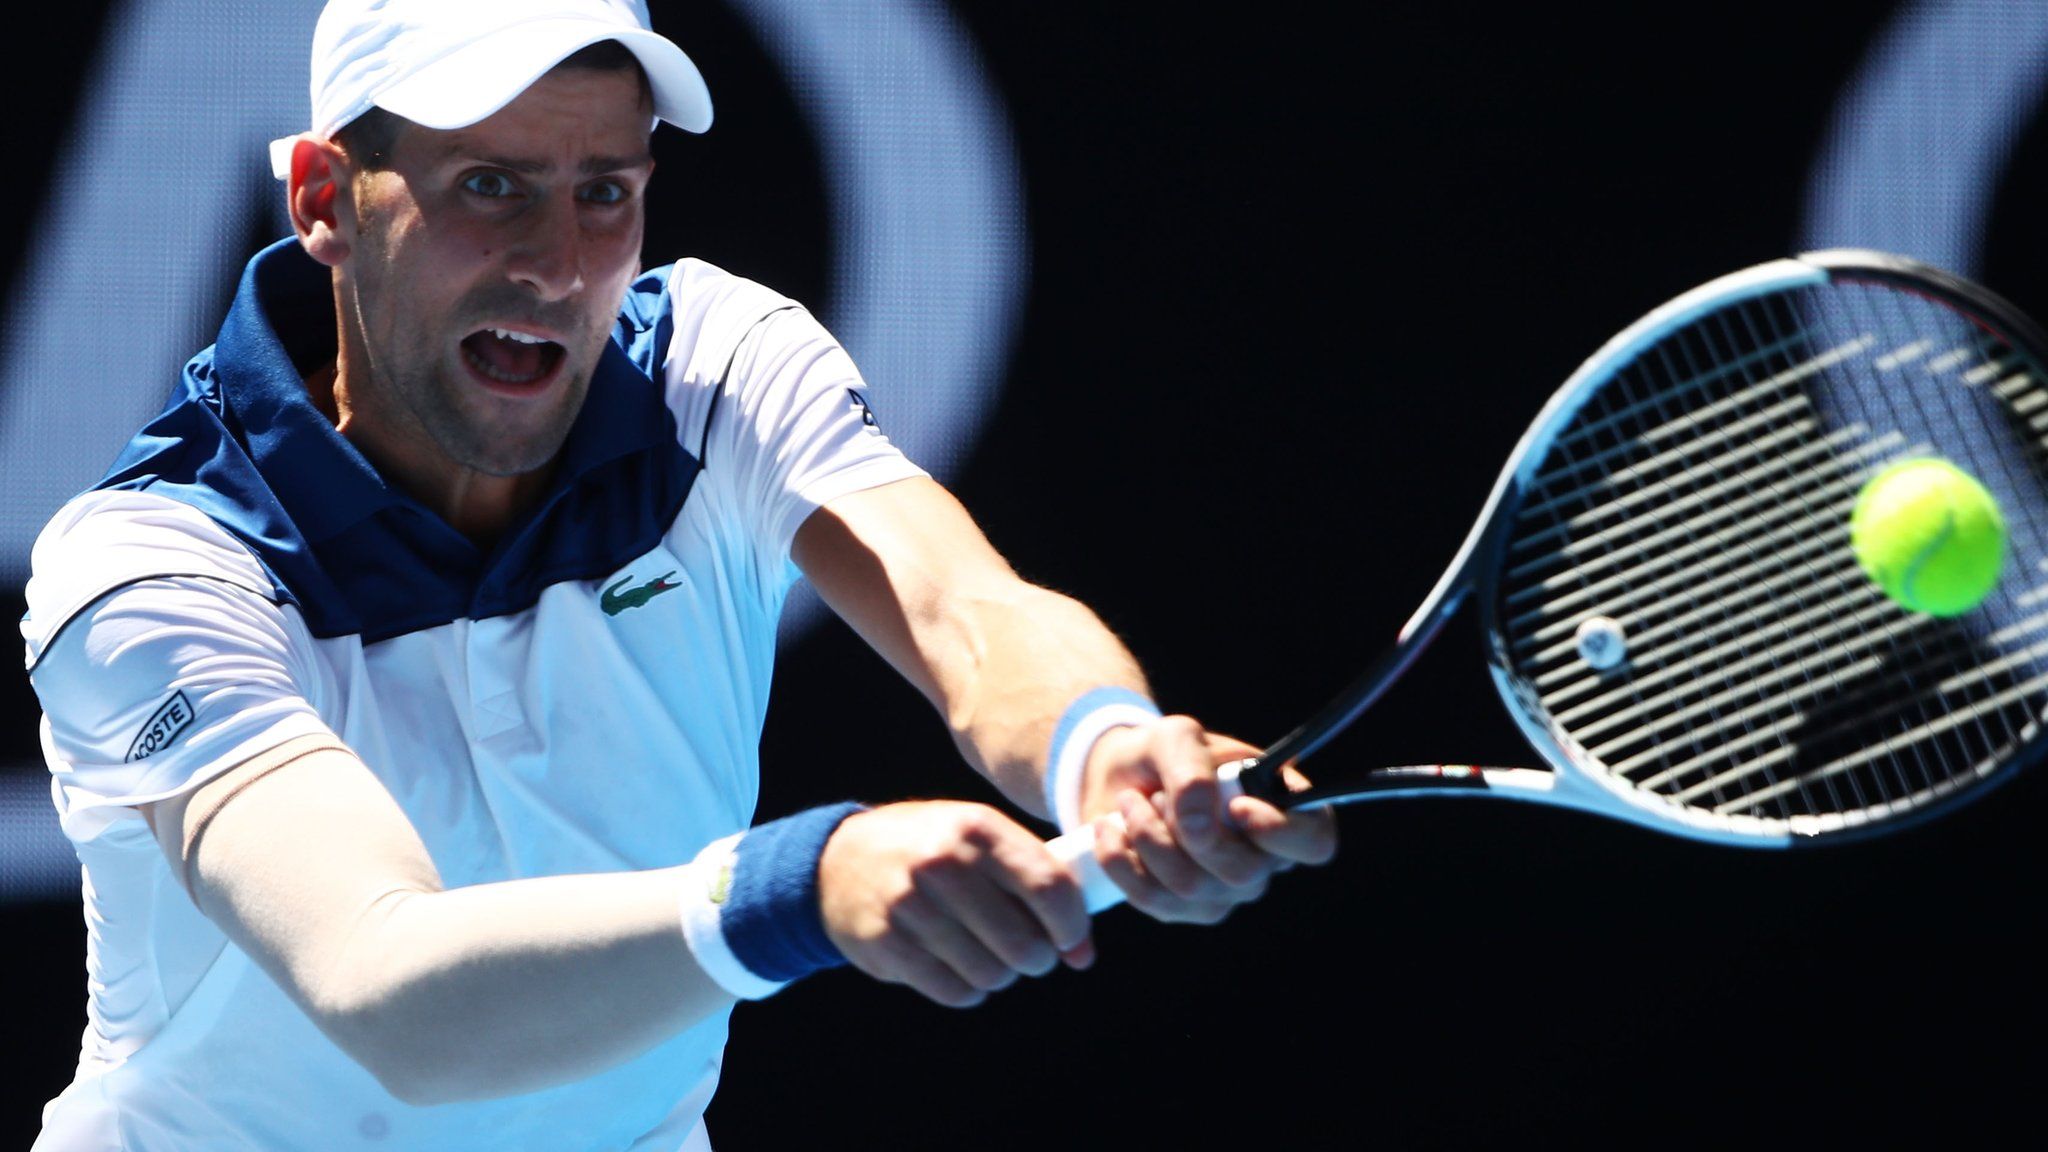 Novak Djokovic playing against Donald Young in the Australian Open